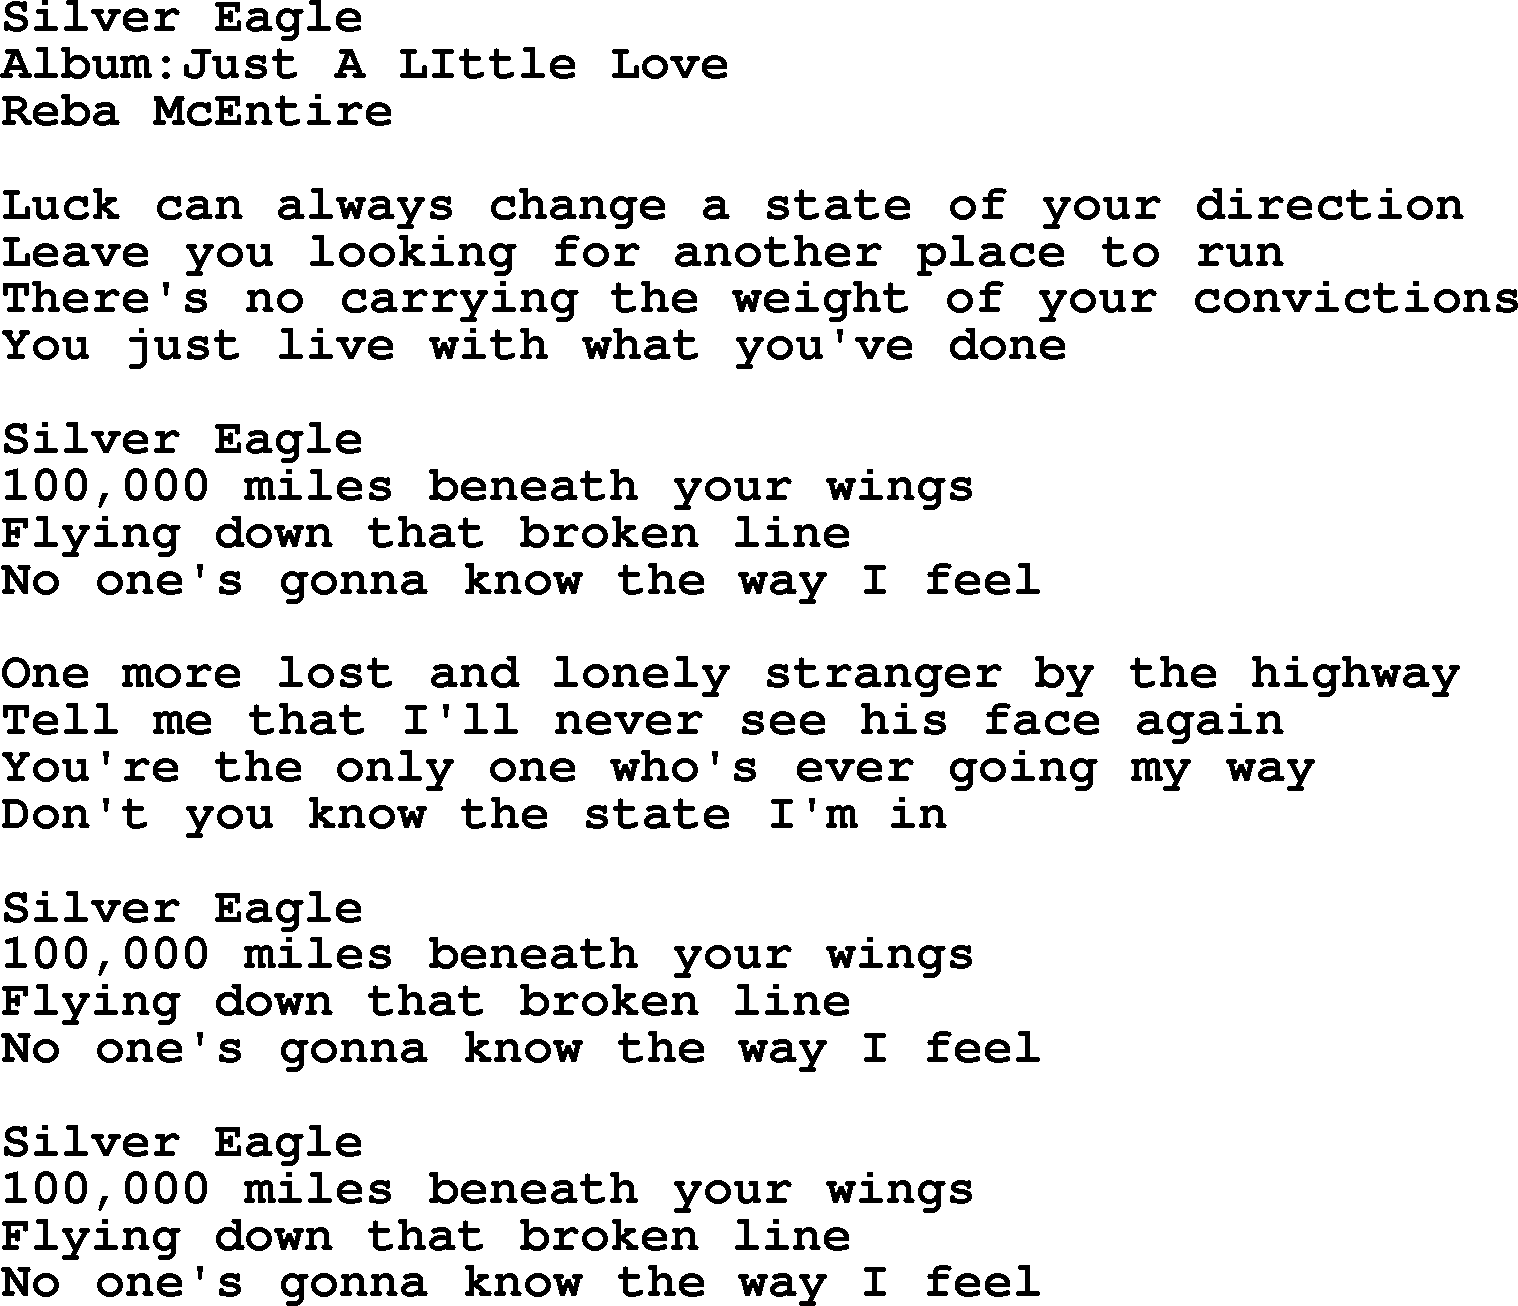 Reba McEntire song: Silver Eagle lyrics